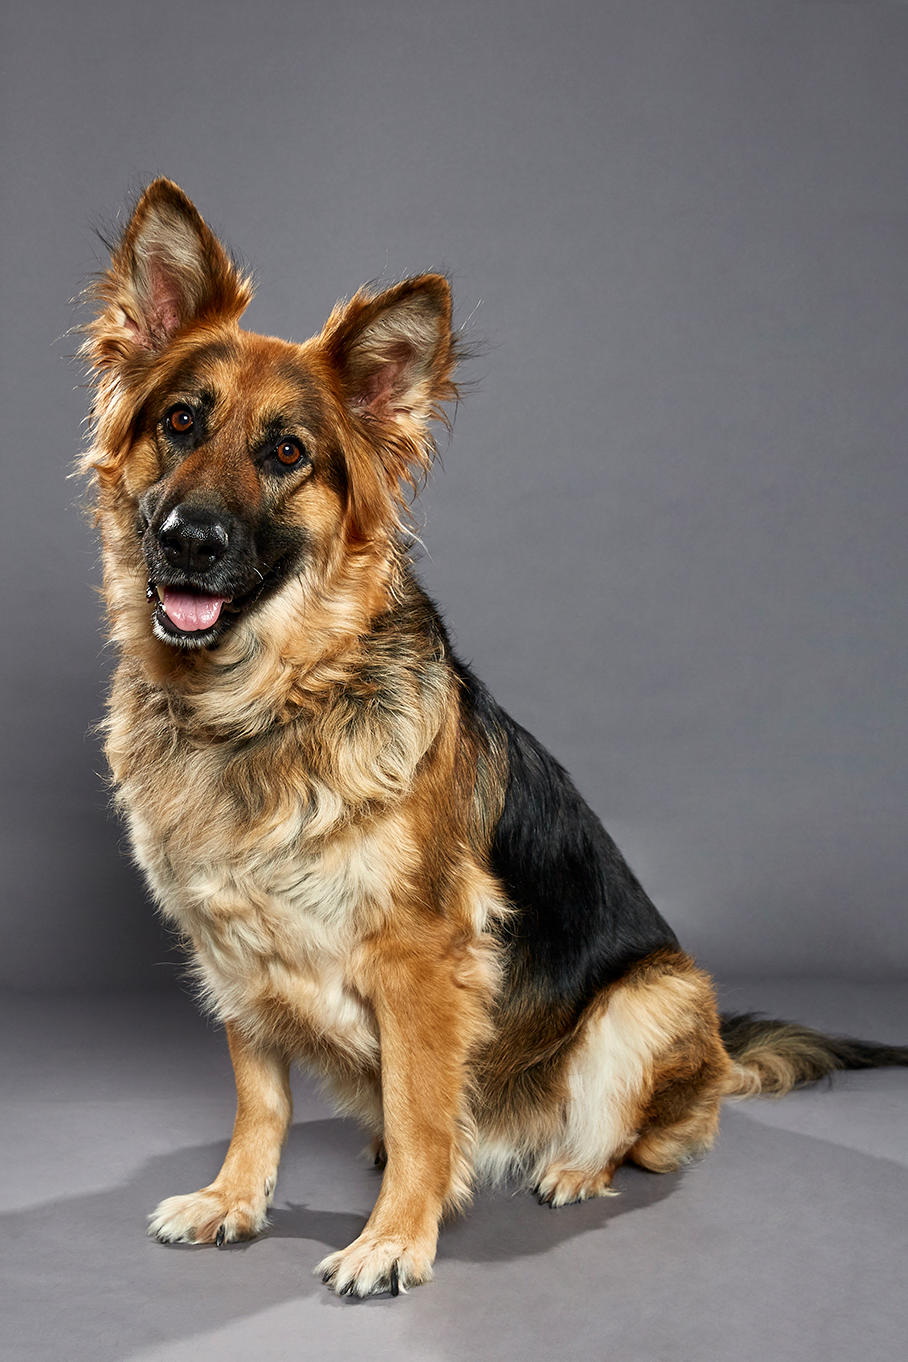 Puppy Bowl XVI: Meet the Stars of the Dog Bowl | Puppy Bowl | Animal Planet